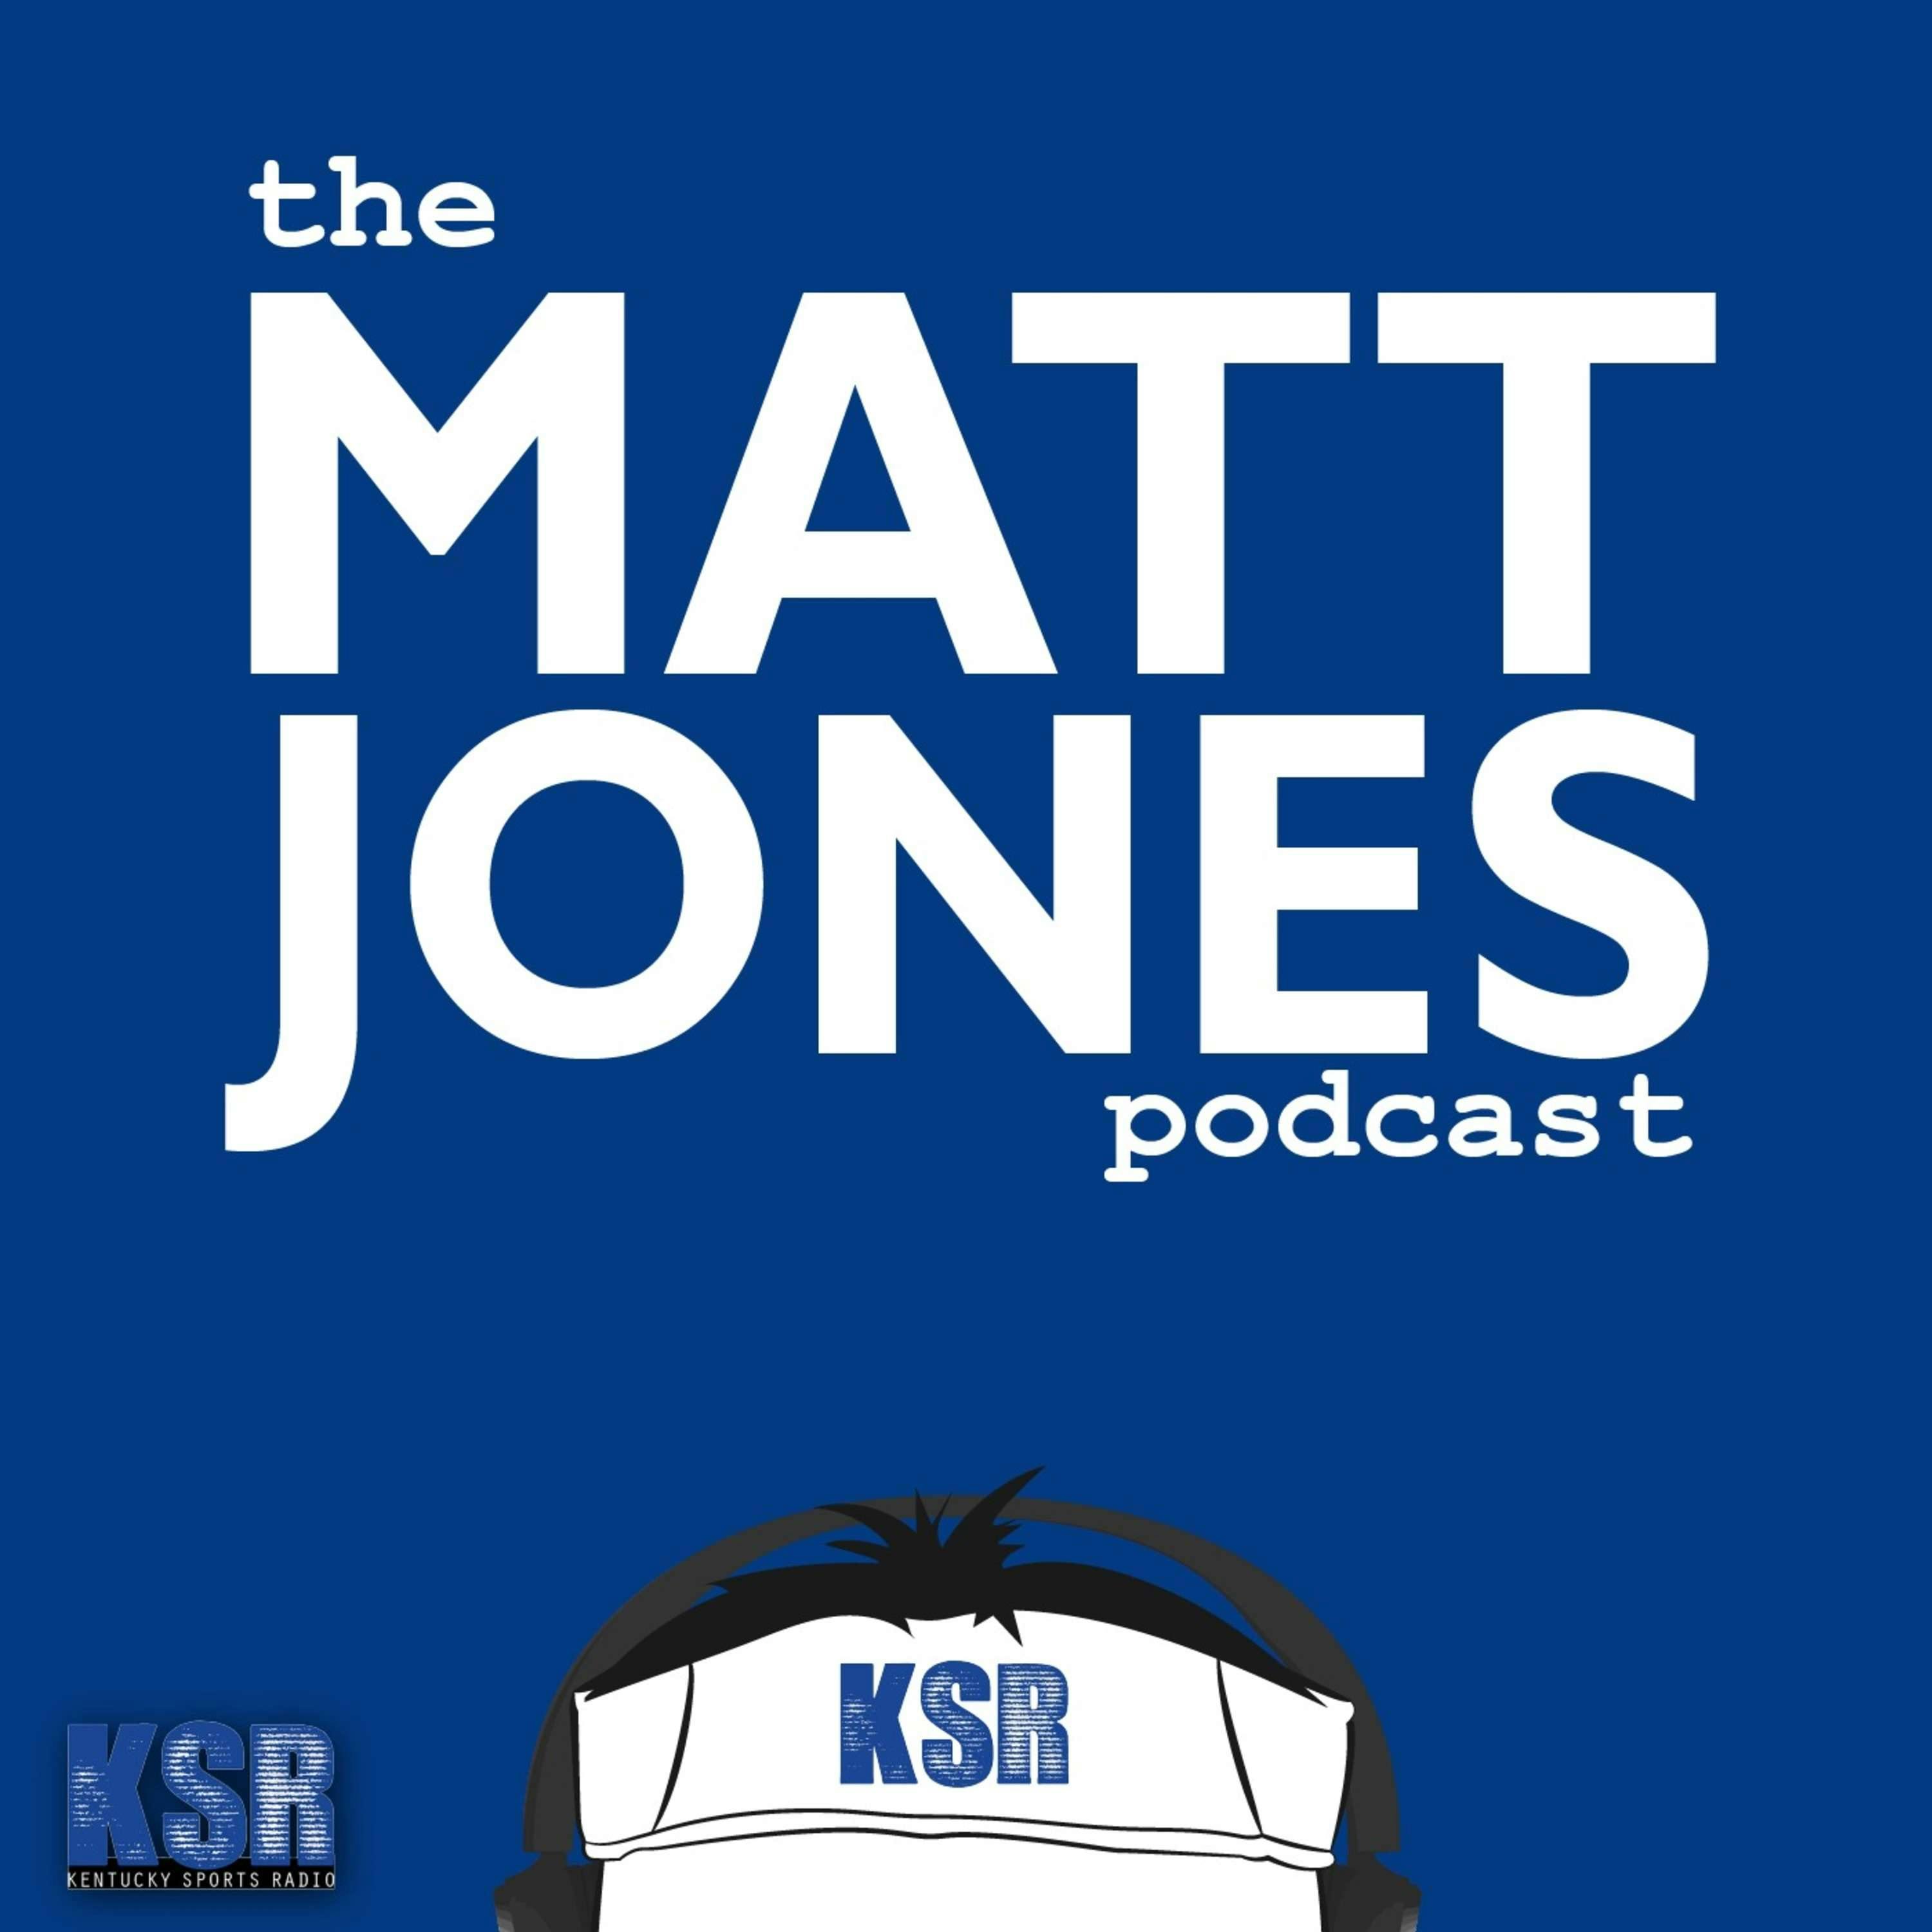 The Matt Jones Podcast: E56 Hillbilly Elegy with J.D. Vance